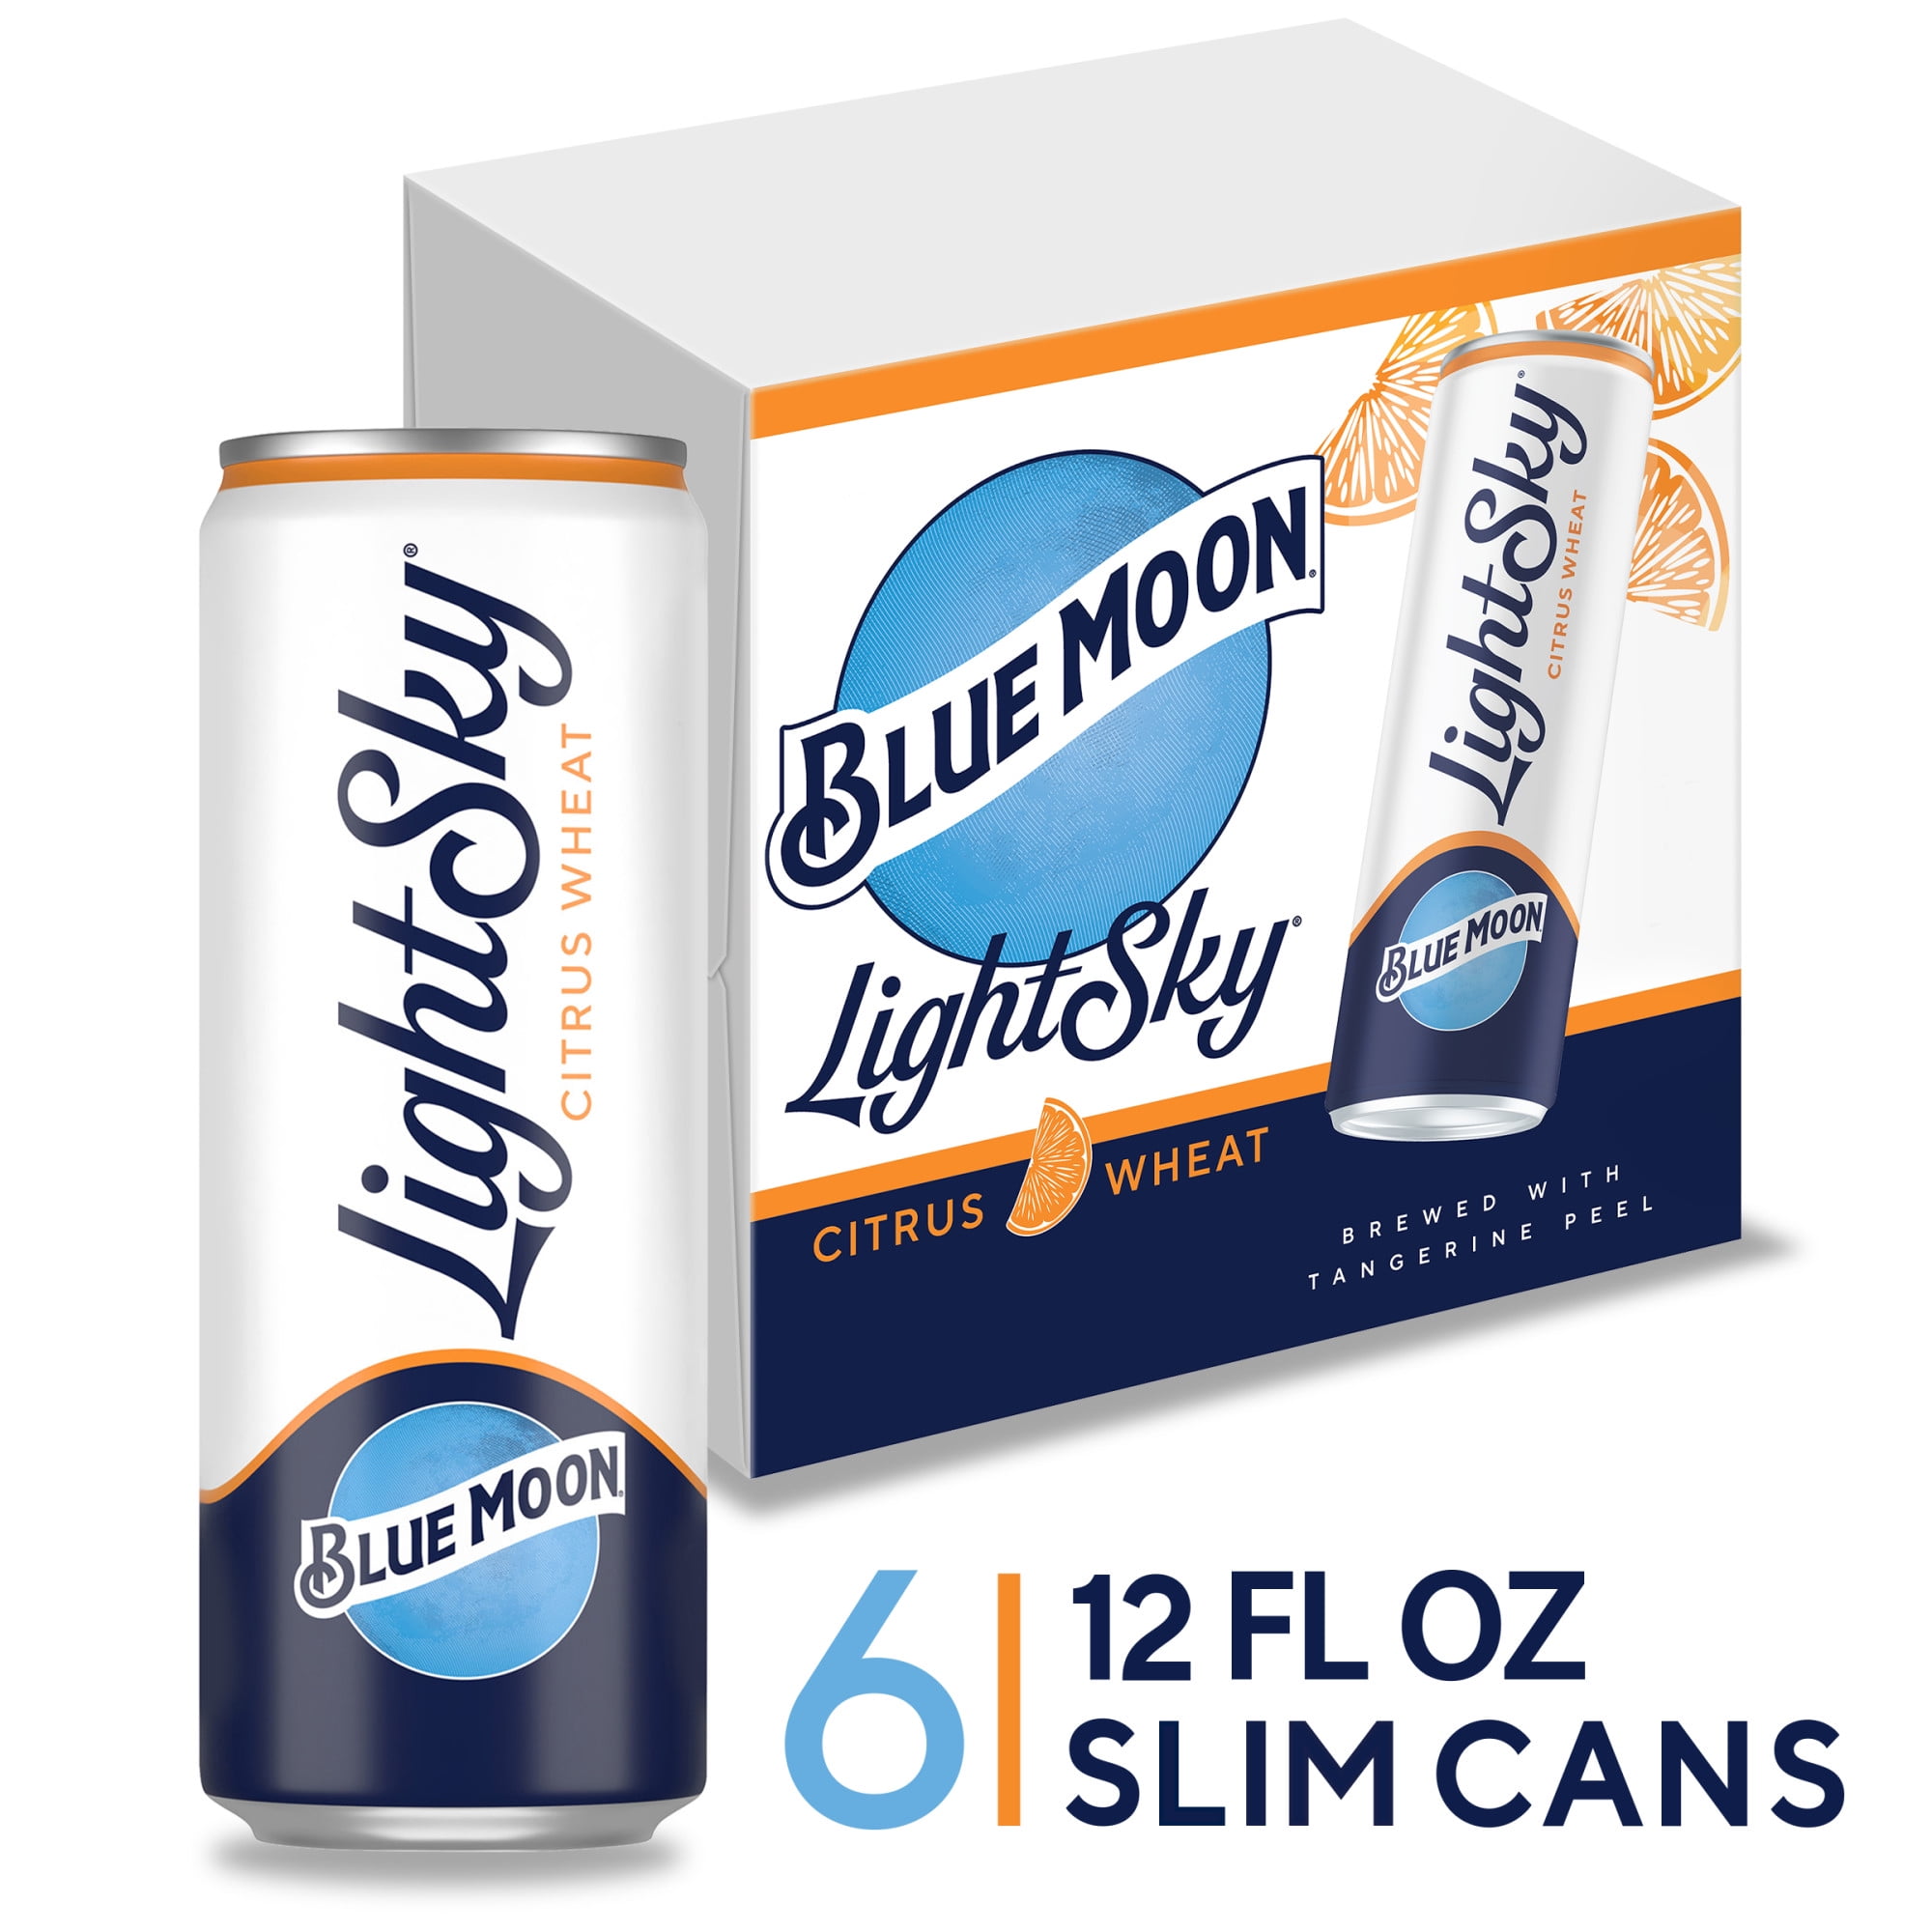 Blue Moon Light Sky Wheat Beer, Craft Beer, Beer 6 Pack, 12 FL OZ Cans, 4% ABV